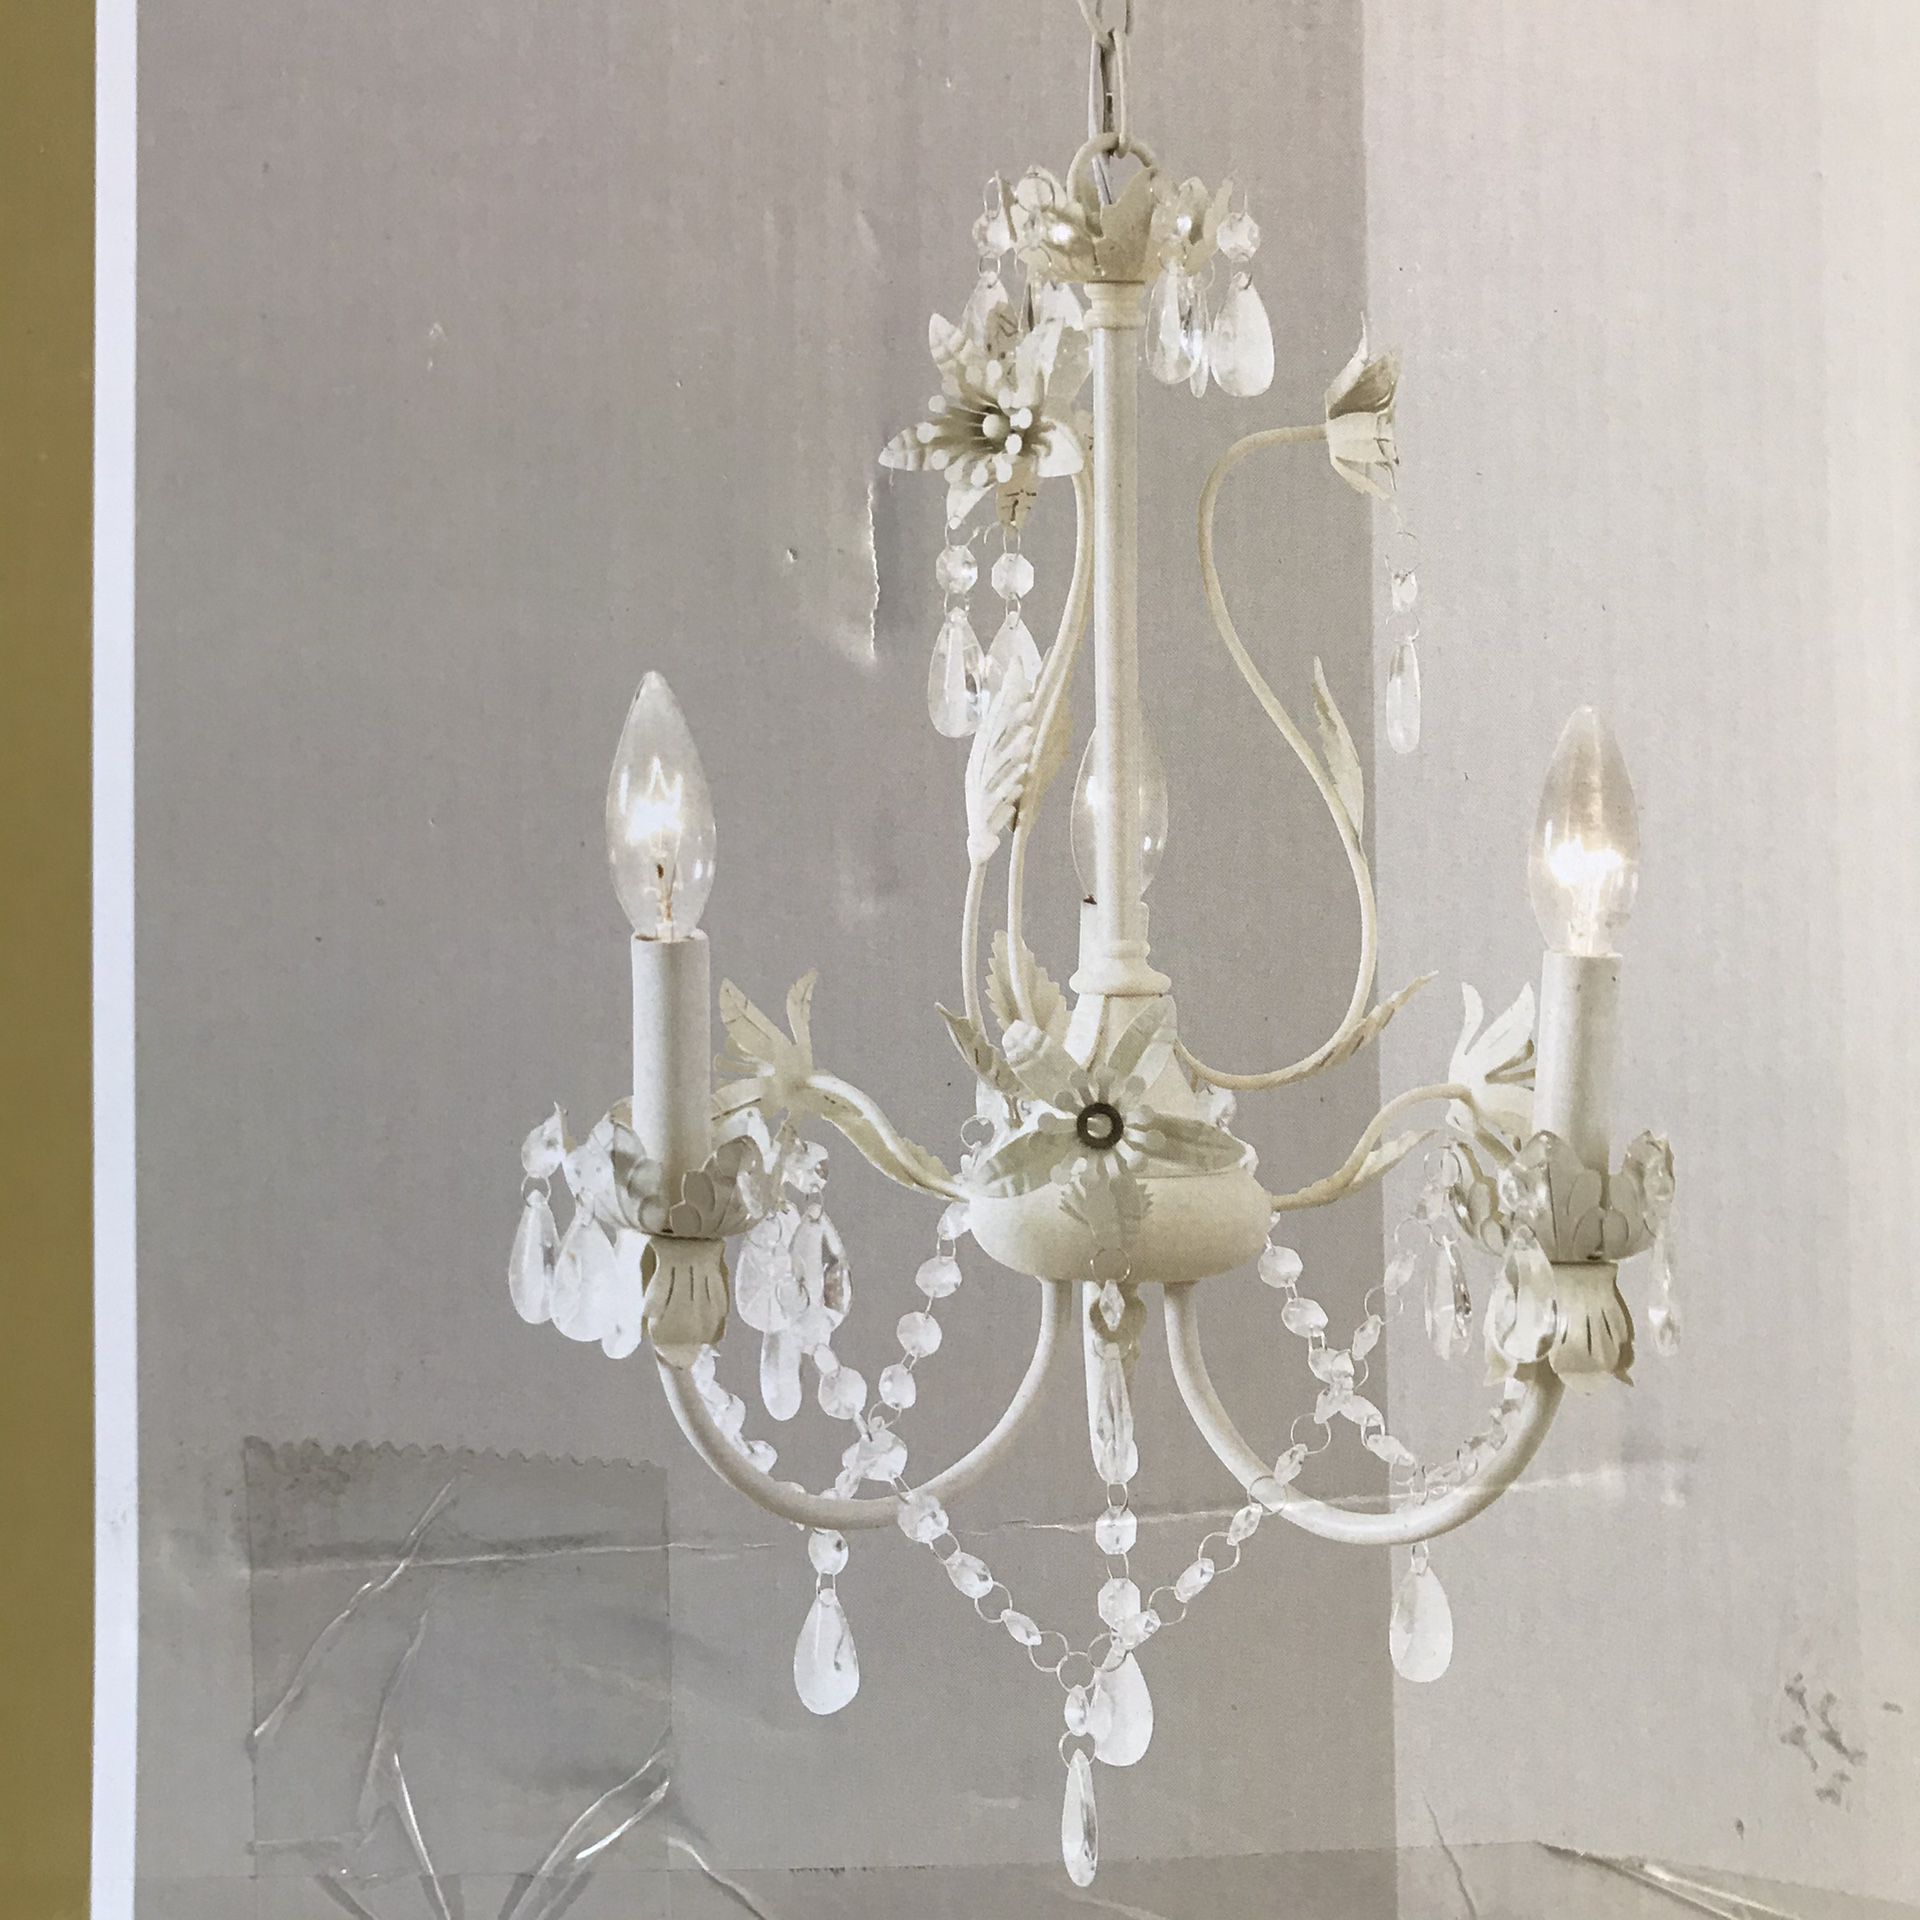 NEW White chandeliers (2) Light Fixture